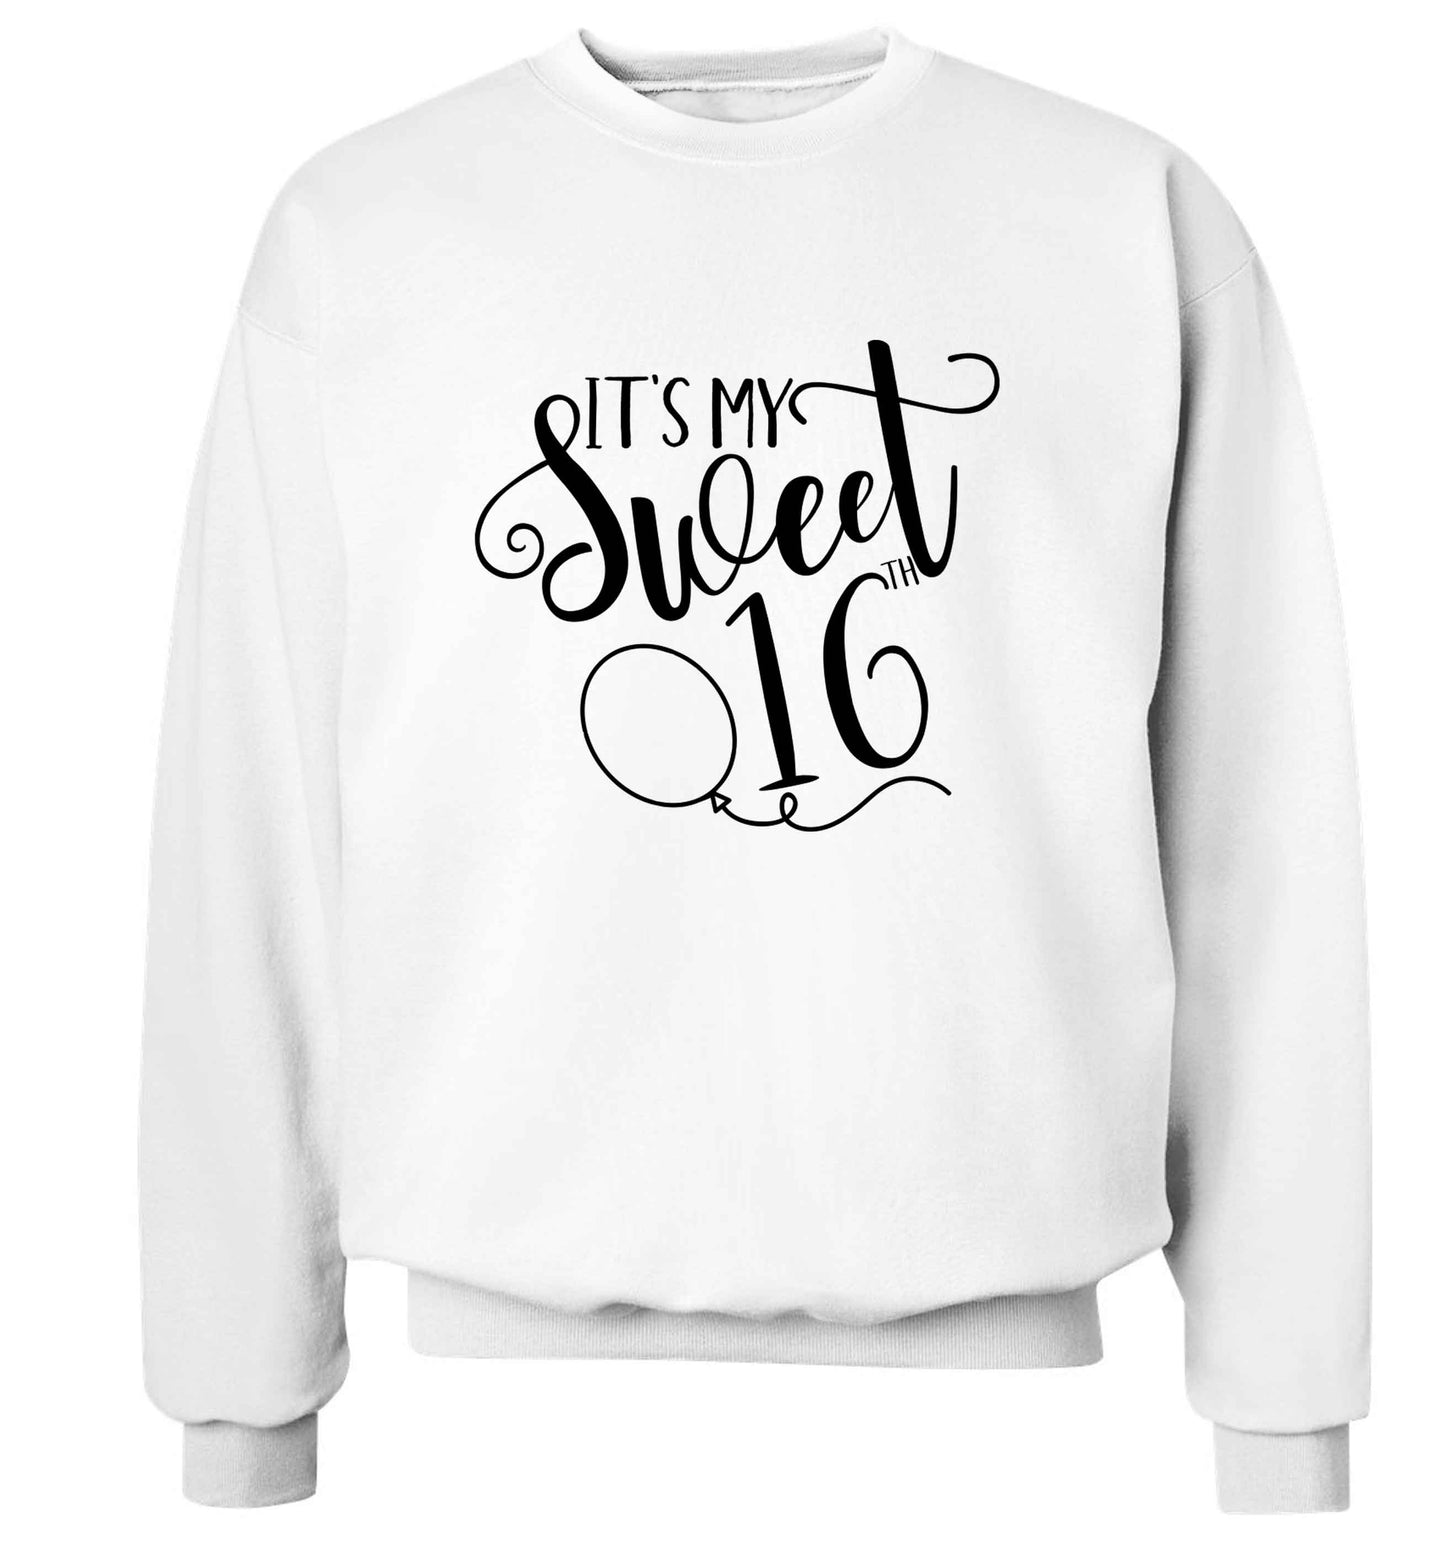 It's my sweet 16thadult's unisex white sweater 2XL